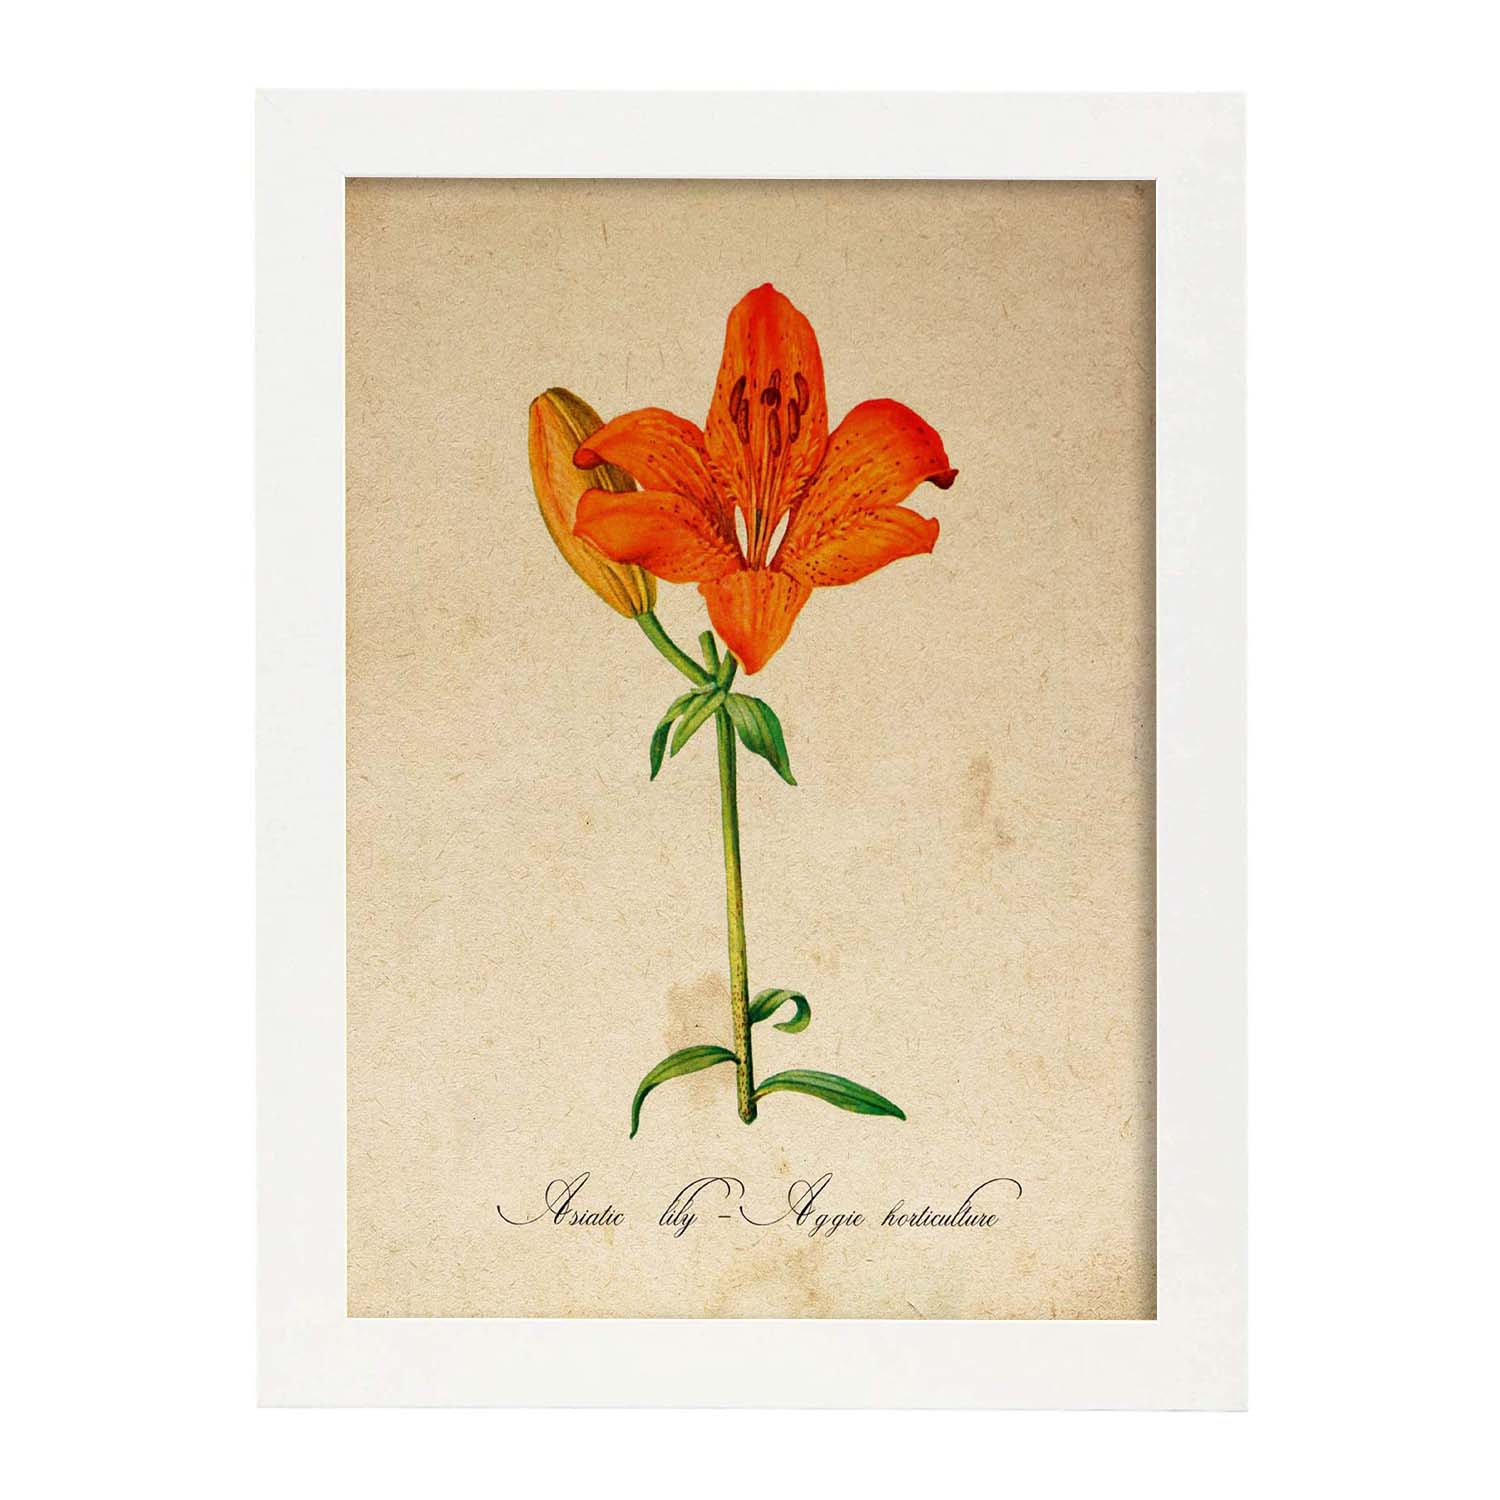 Poster de flores vintage. Lámina Asiatic Lily - Aggie Horticulture con diseño vintage.-Artwork-Nacnic-A4-Marco Blanco-Nacnic Estudio SL